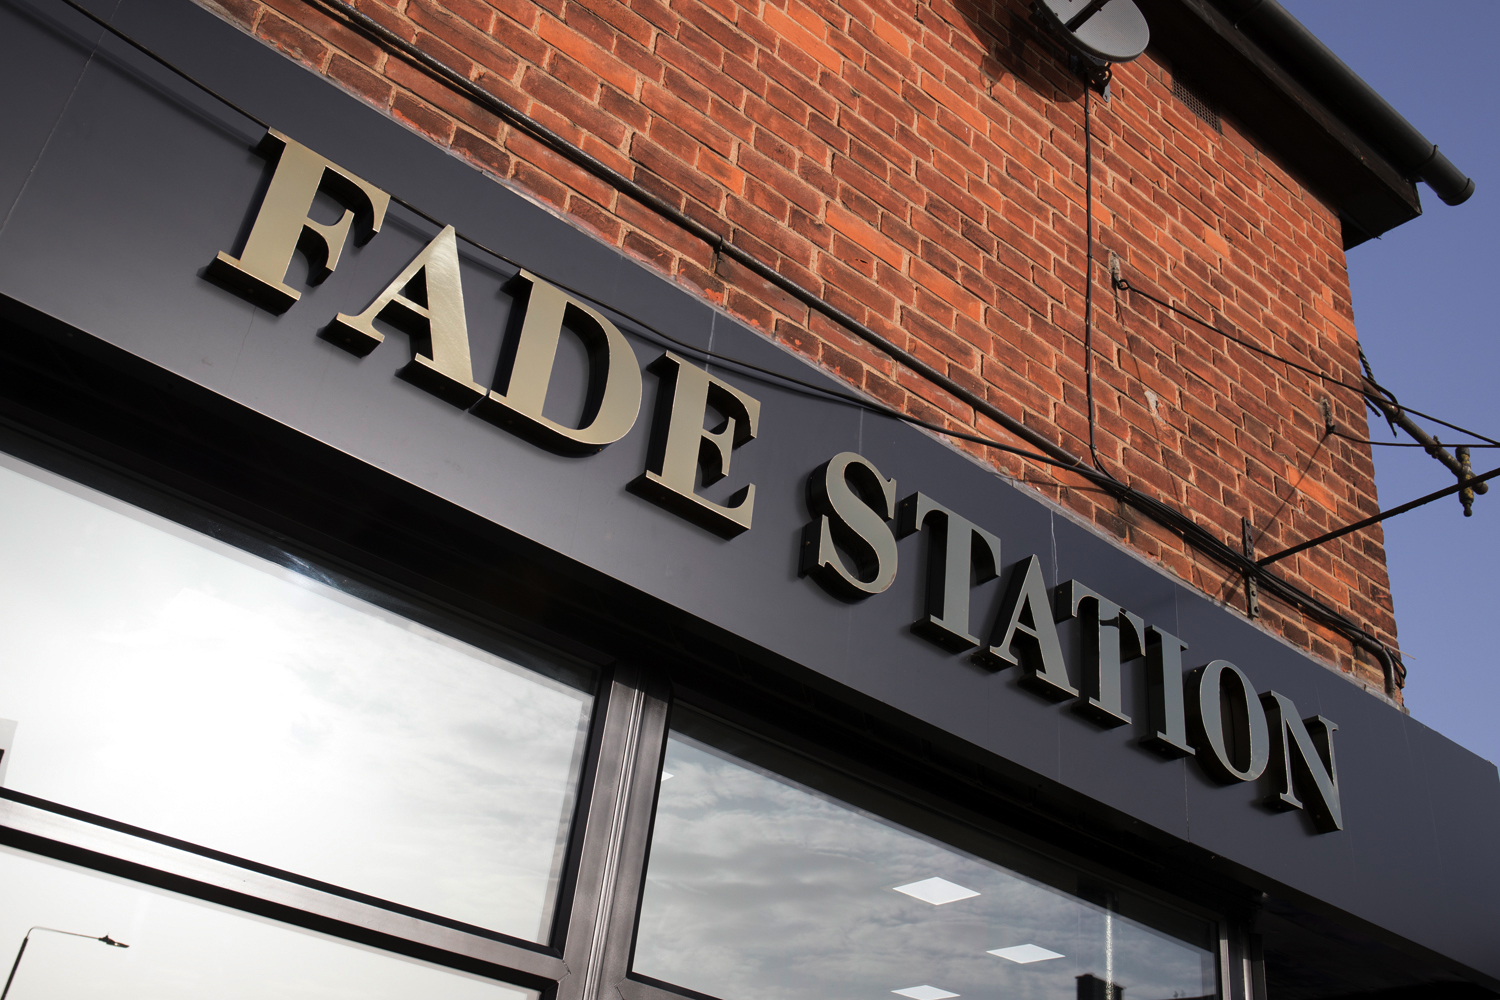 Fade Station 7